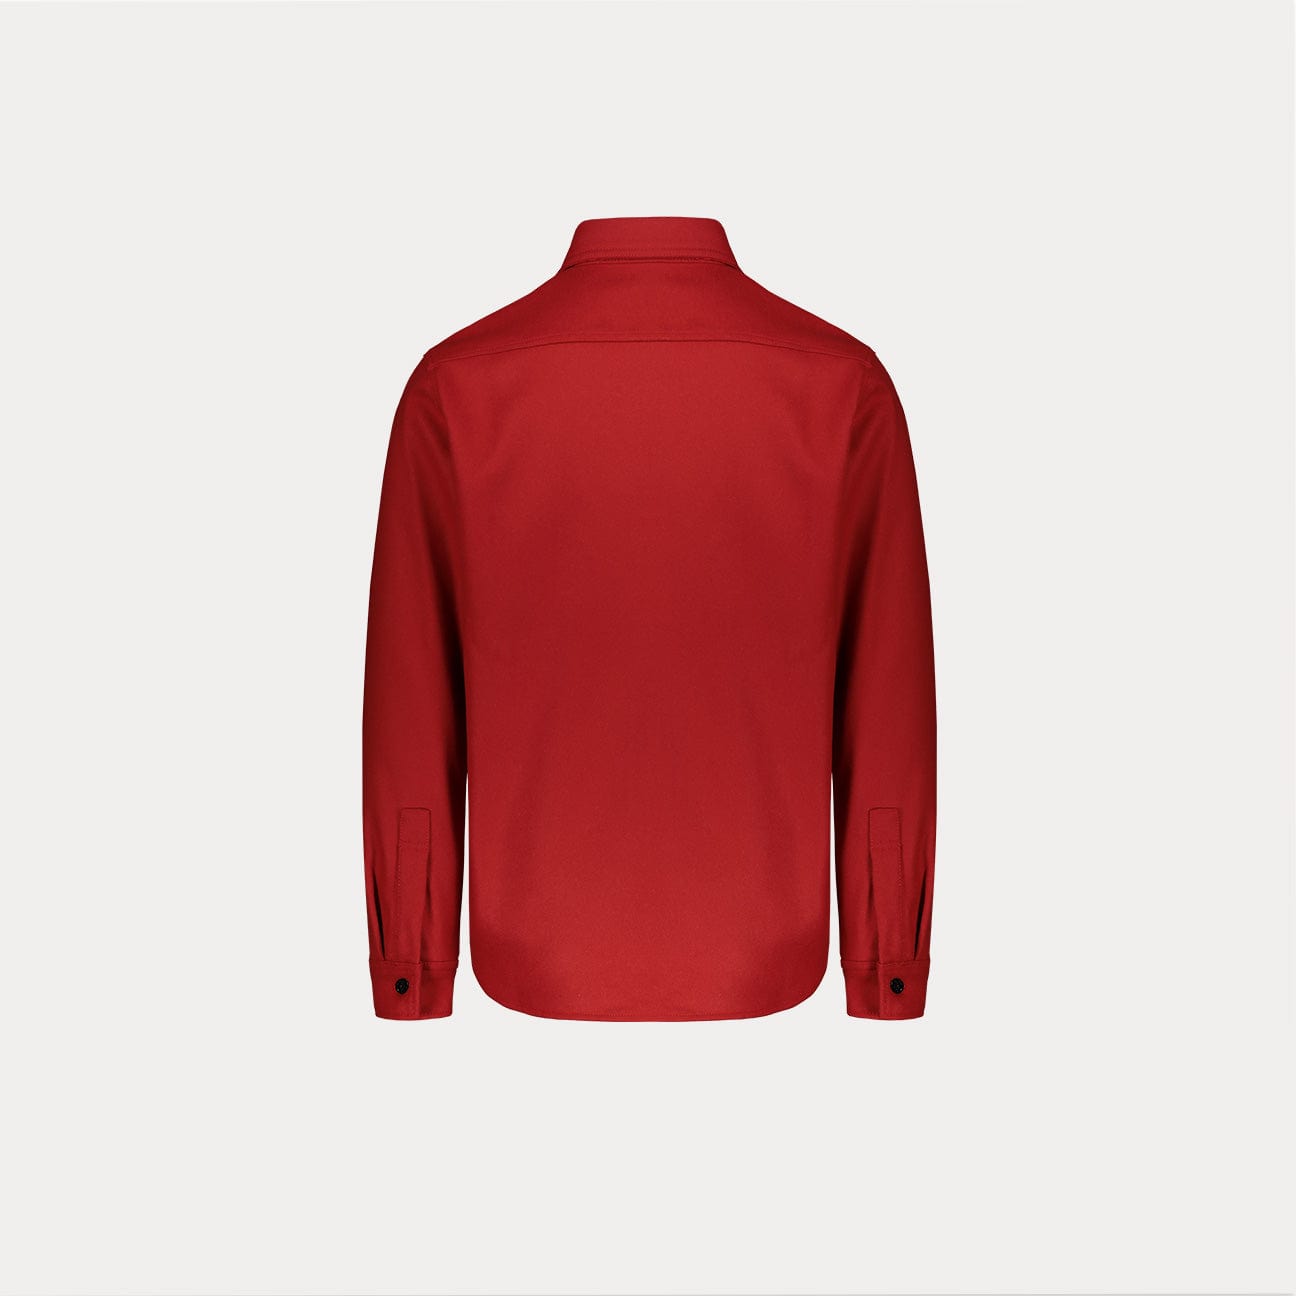 CHESAPEAKES Camicia overshirt CPO Red